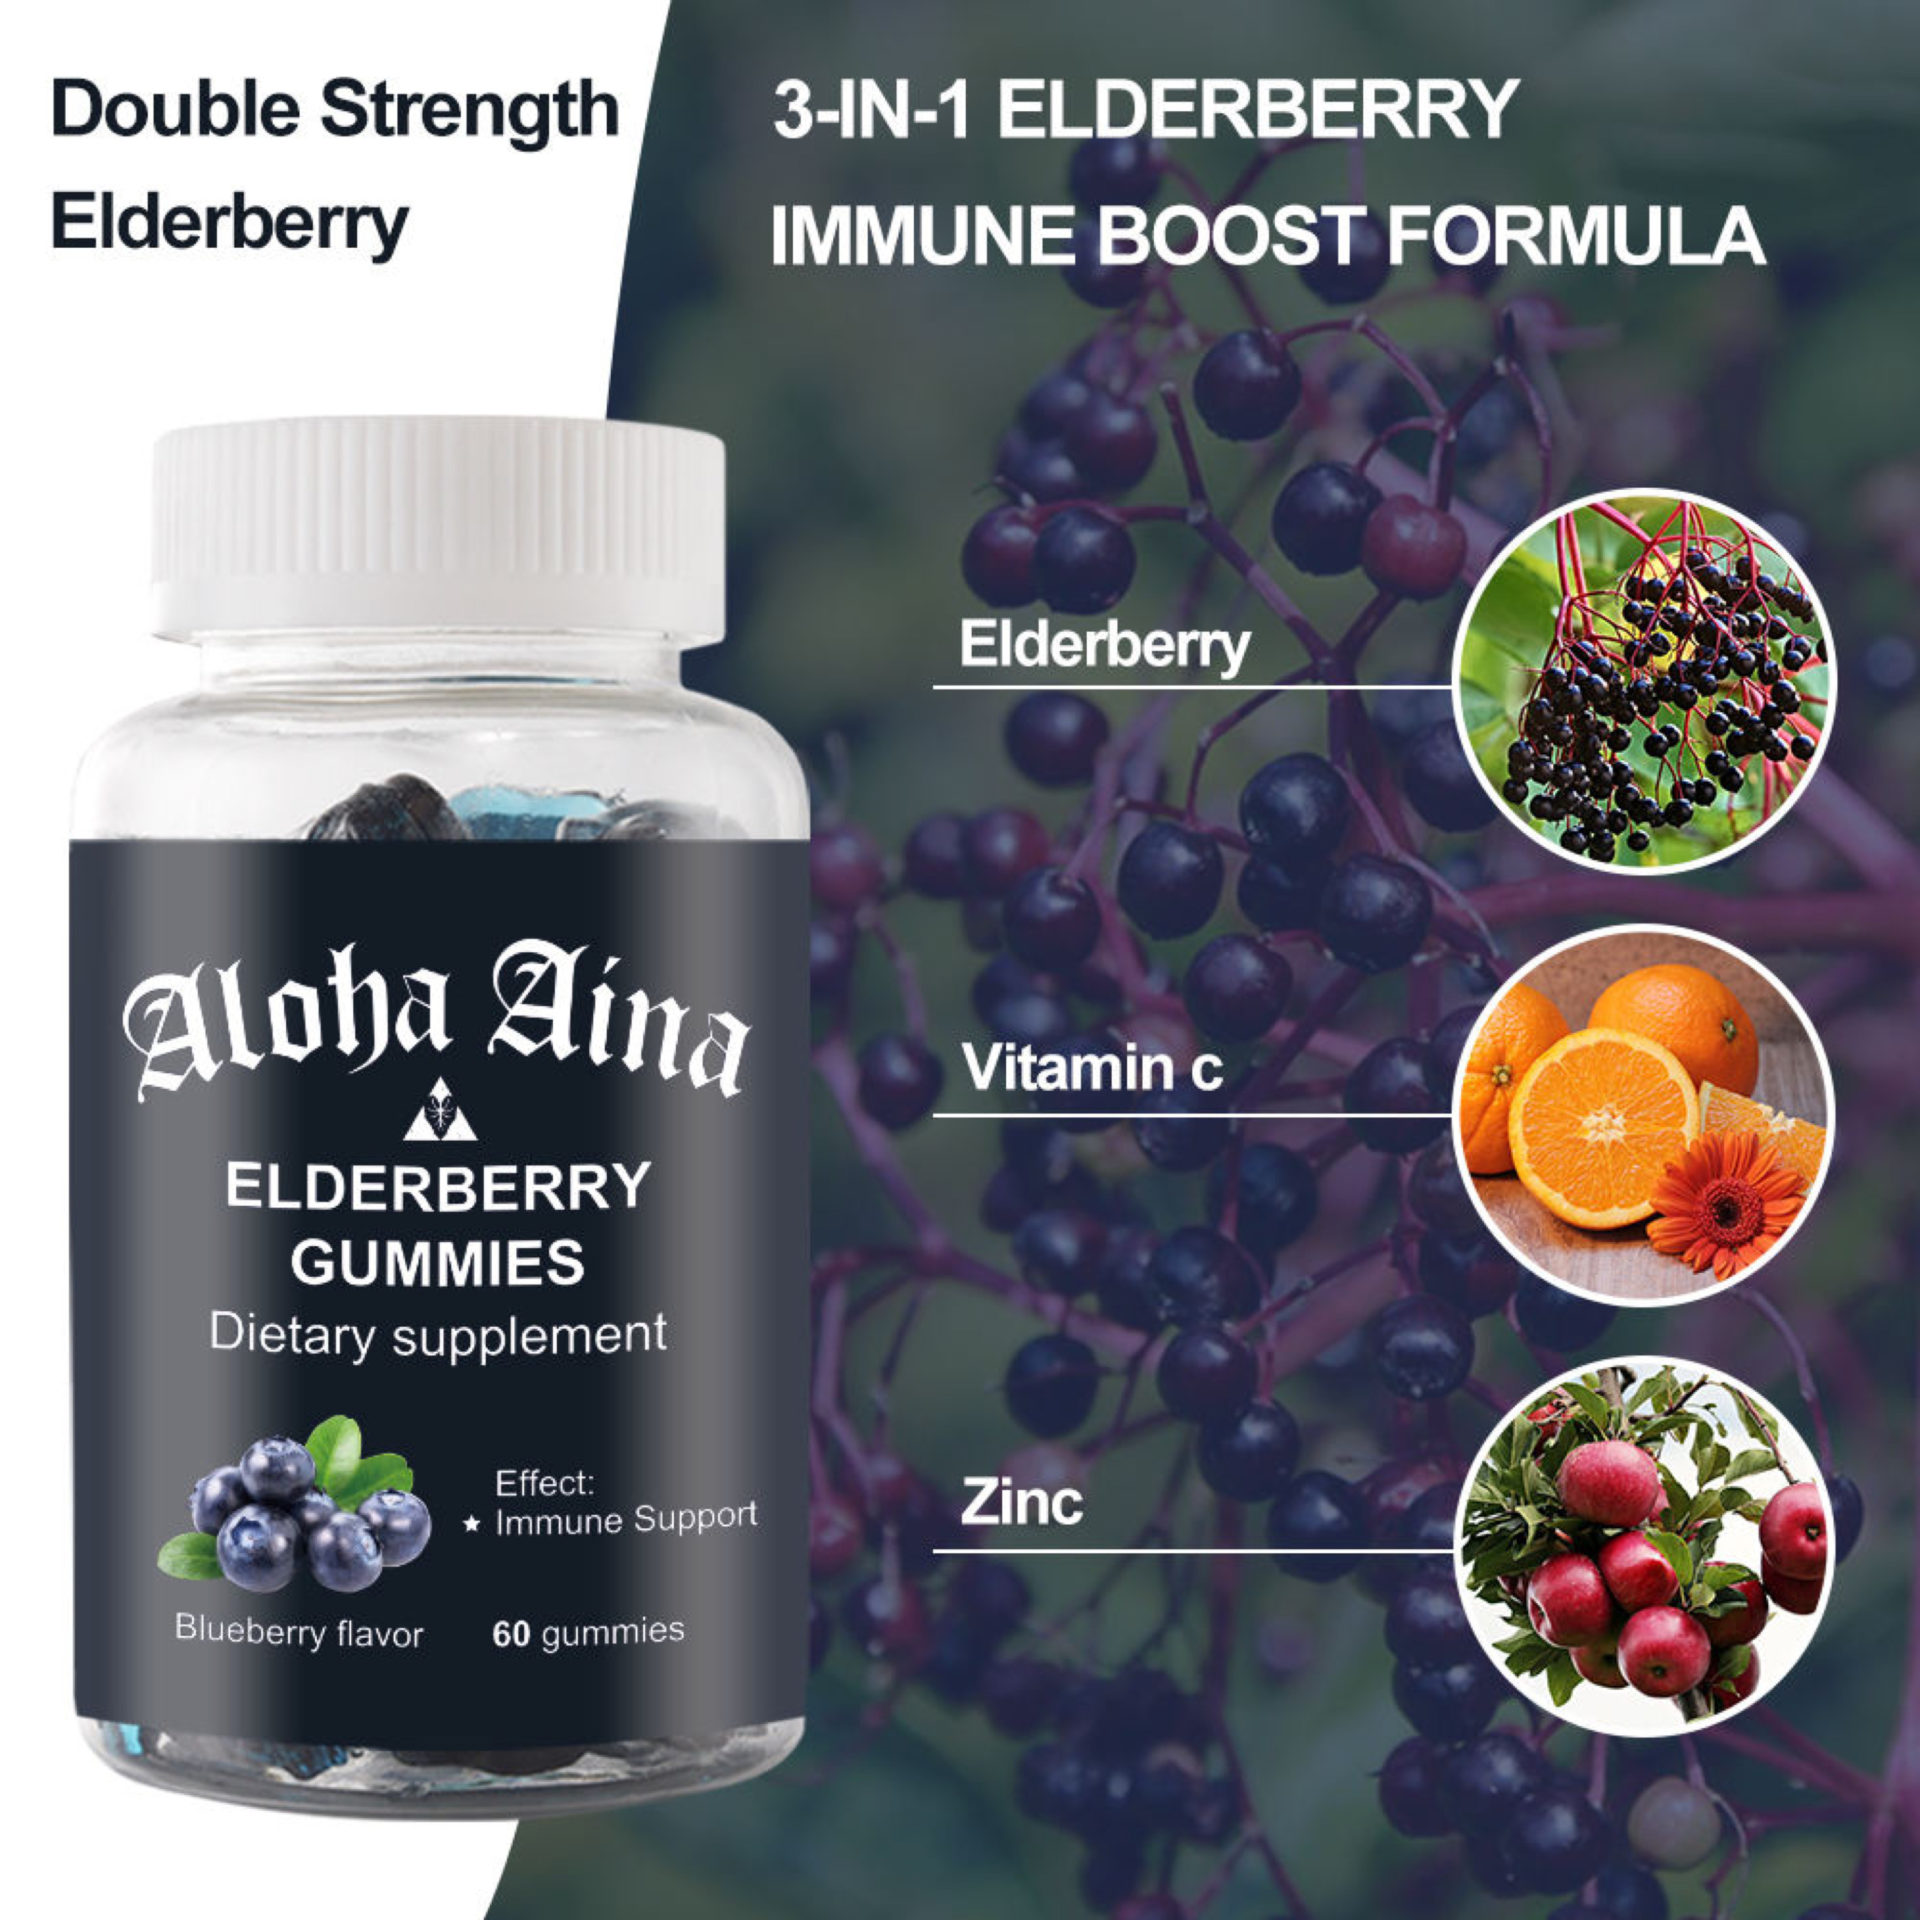 Buy wholesale Probiotics + Vitamins blackberry flavor gummies Aldous Labs